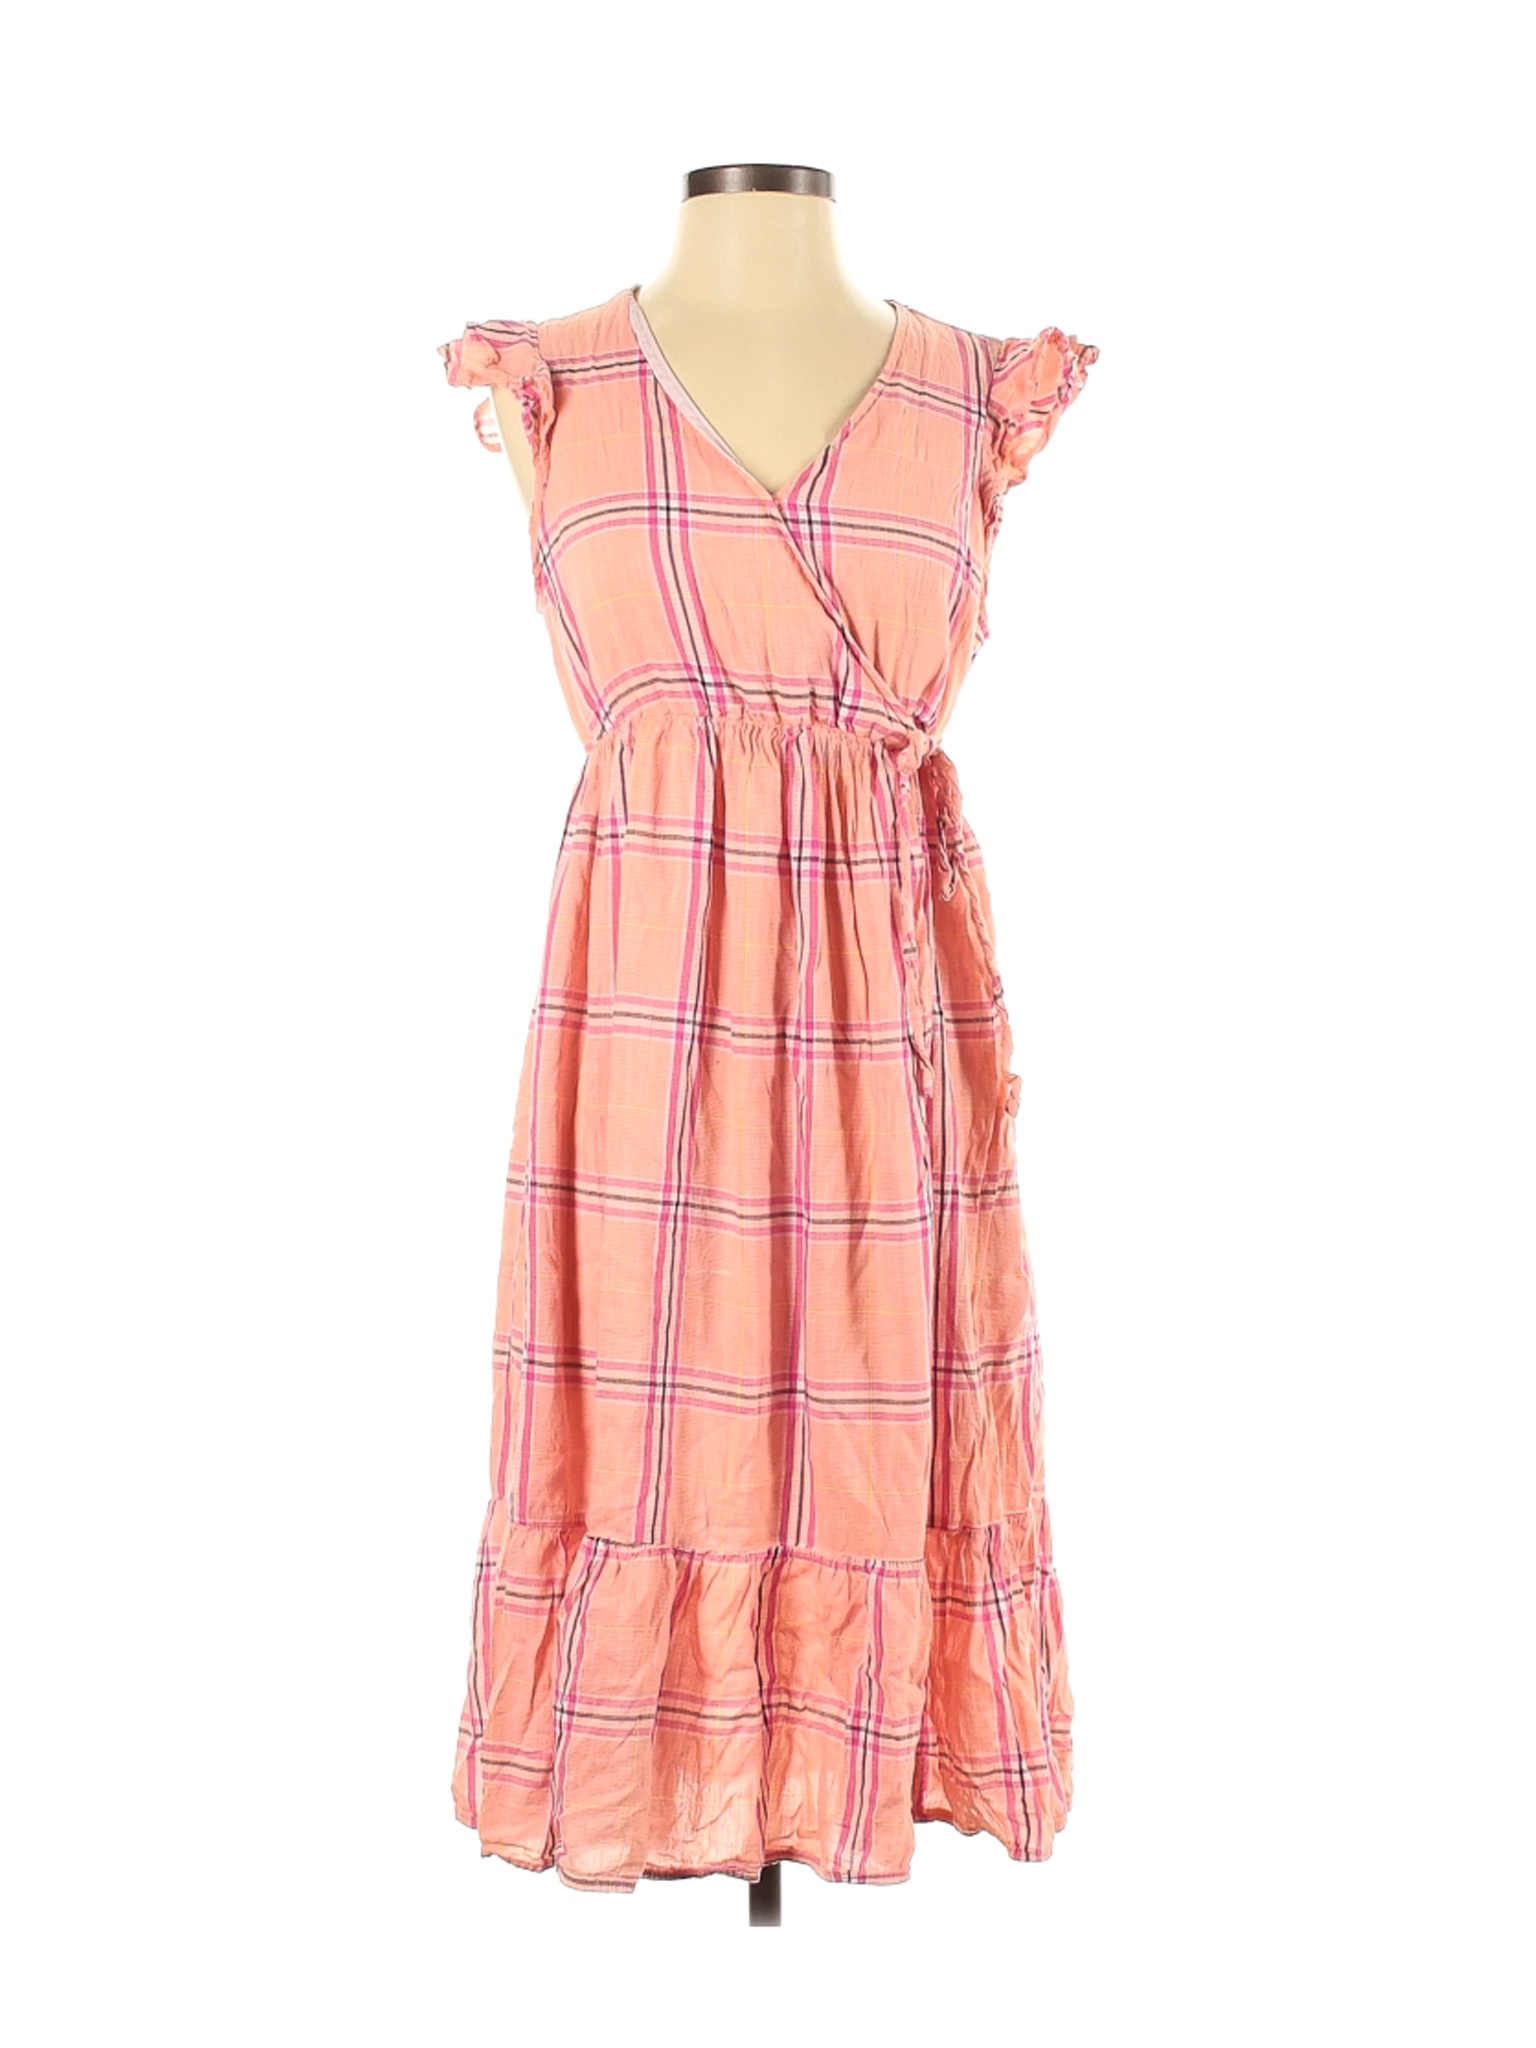 Old Navy Women Pink Casual Dress S | eBay